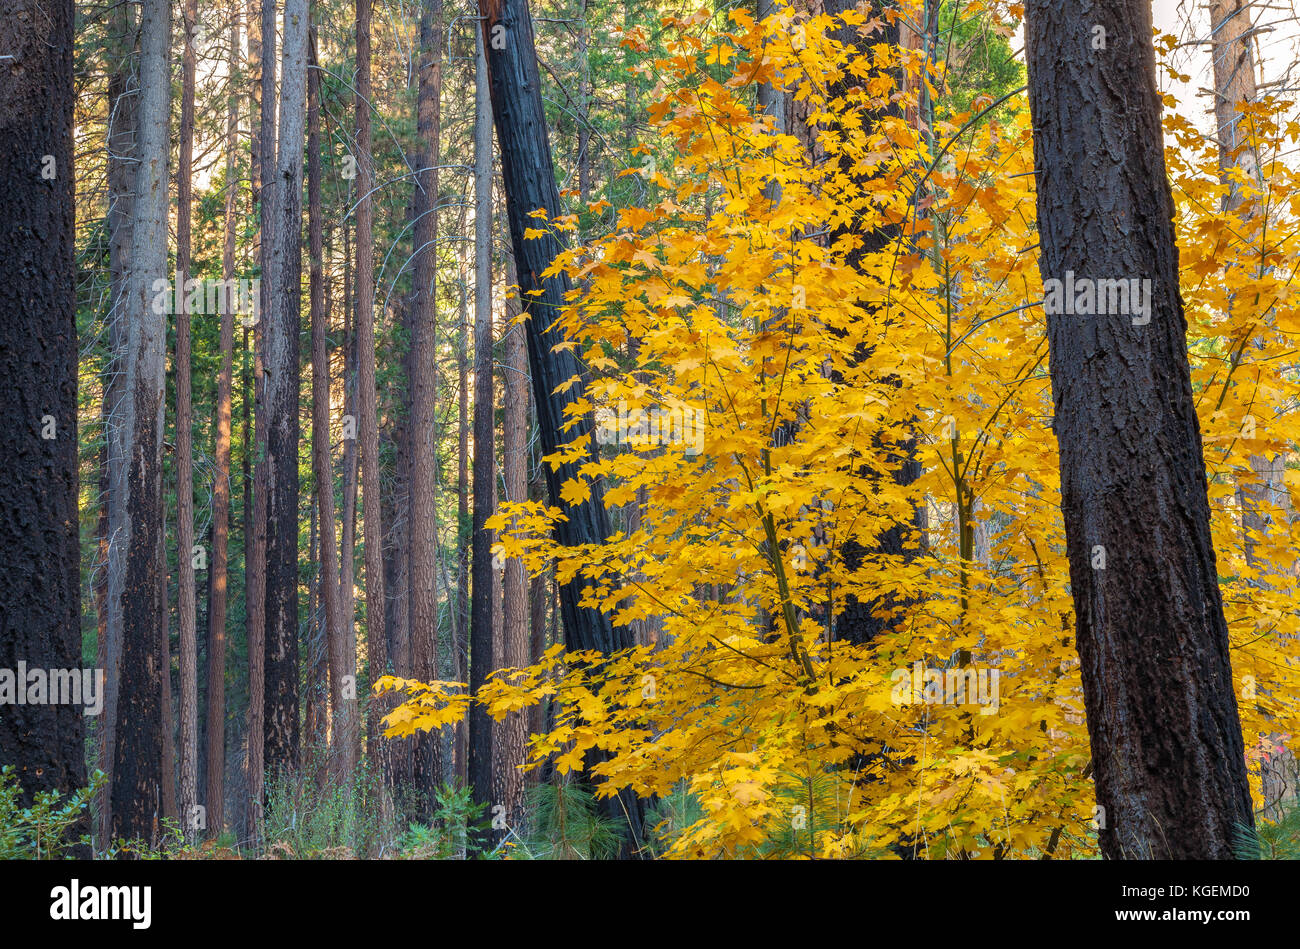 Bigleaf maple tree (Acer macrophyllum) display bright yellow color leaves in autumn, Yosemite National Park, California. Stock Photo